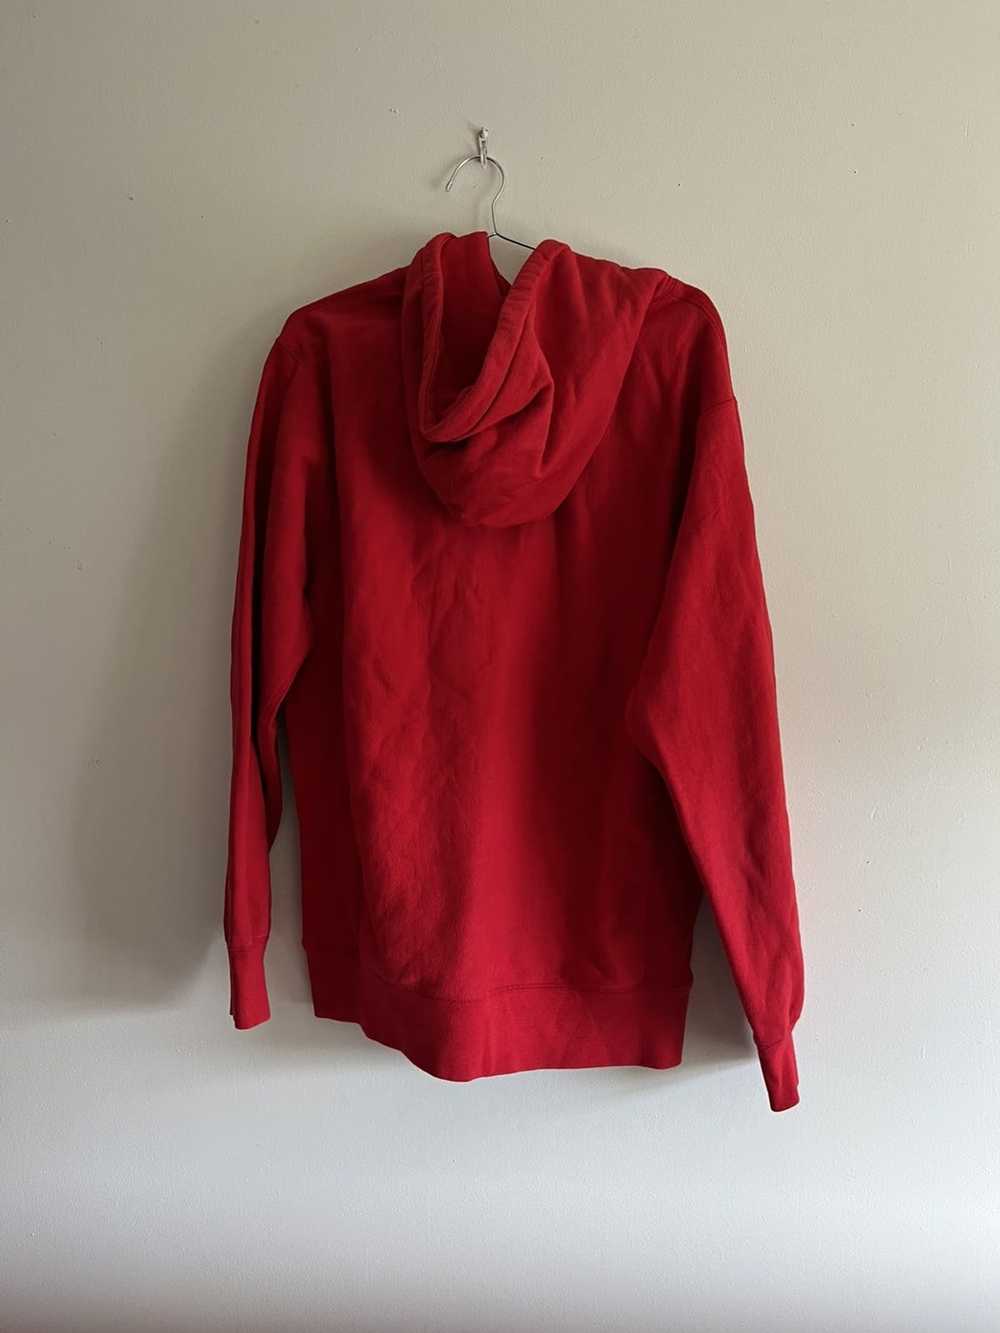 NEW Supreme Louis Vuitton red pattern Full printed 3D hoodie • Kybershop